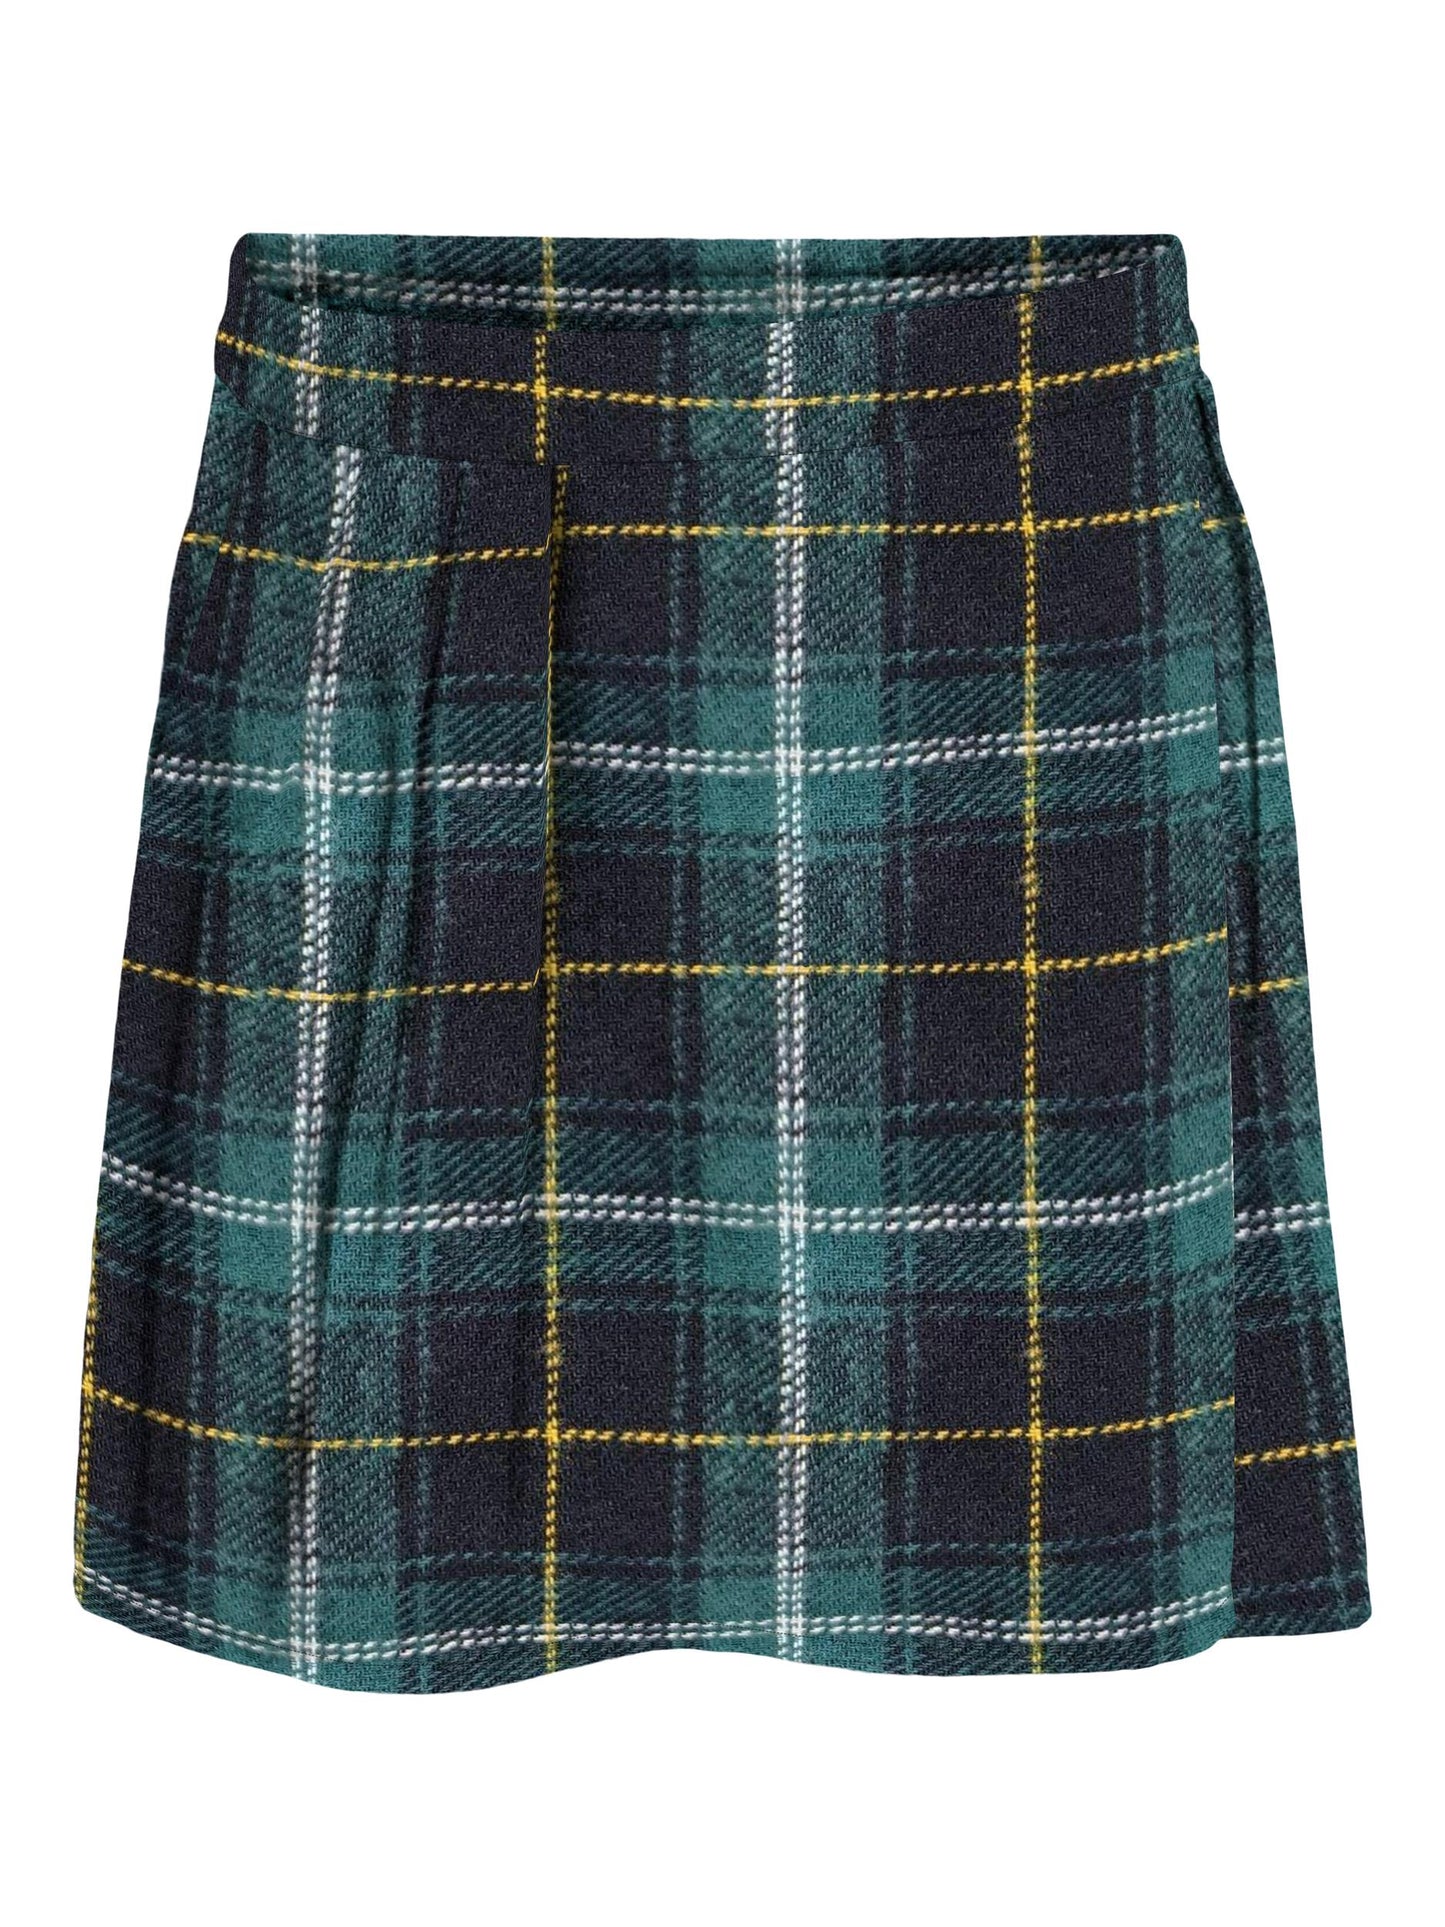 Noisy May - Teal Green Checked Mini Skirt